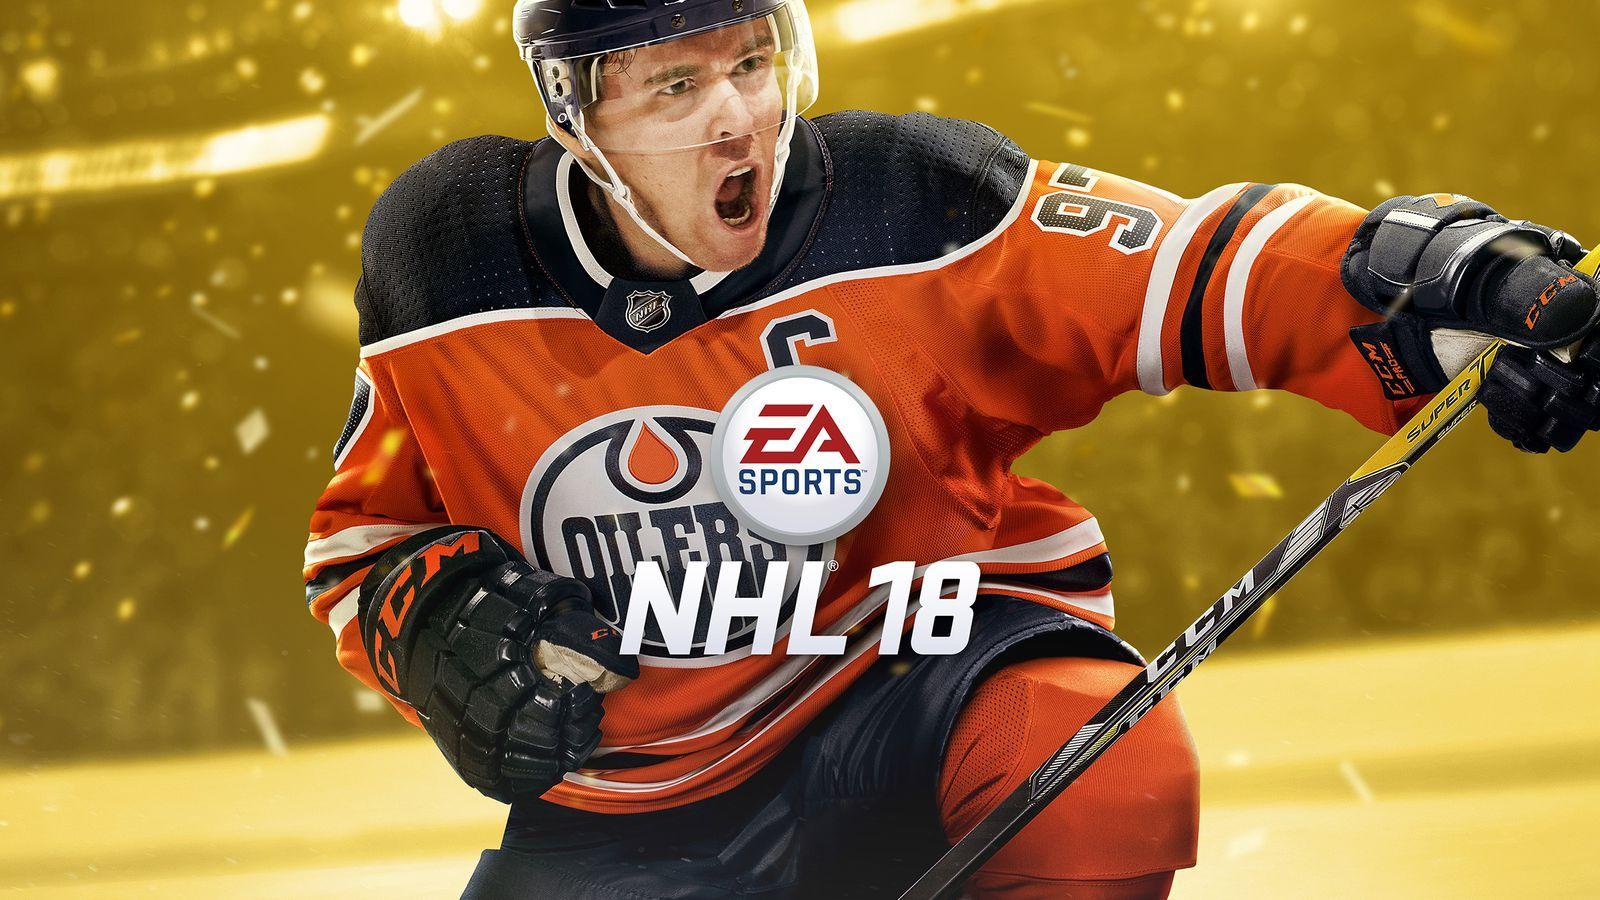 NHL 18 closed beta code giveaway